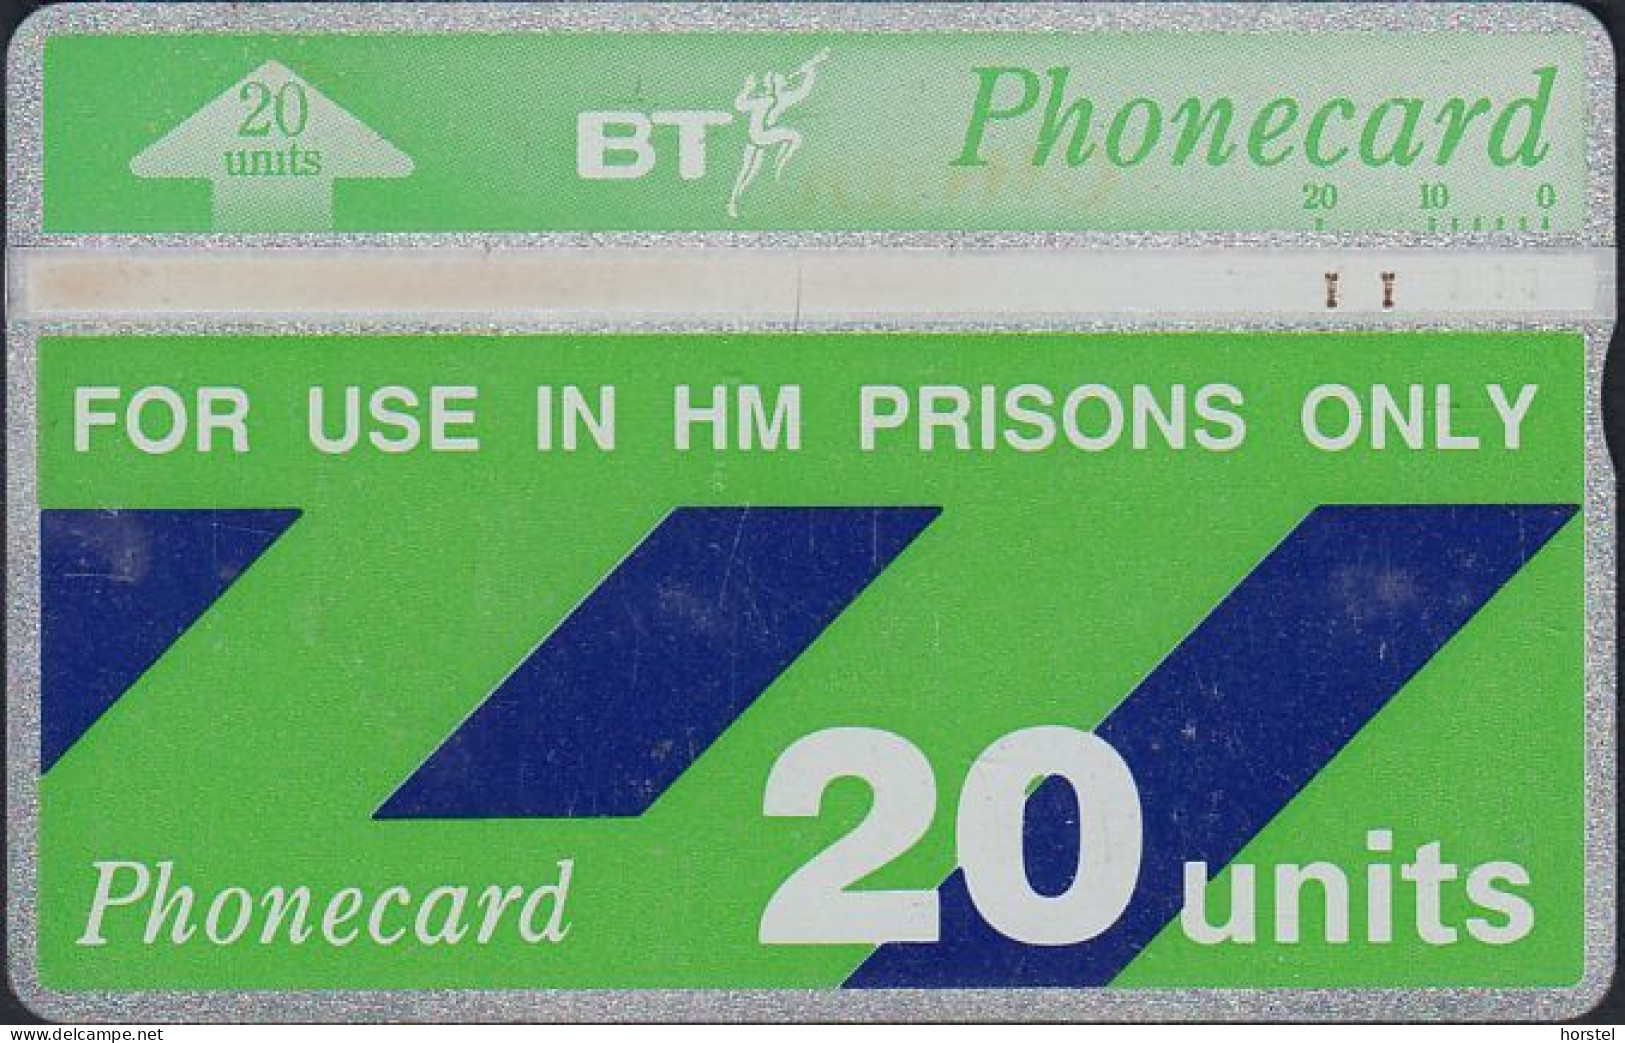 UK - British Telecom L&G H.M. Prison Card CUP005  (212E)  20 Units - Prisons